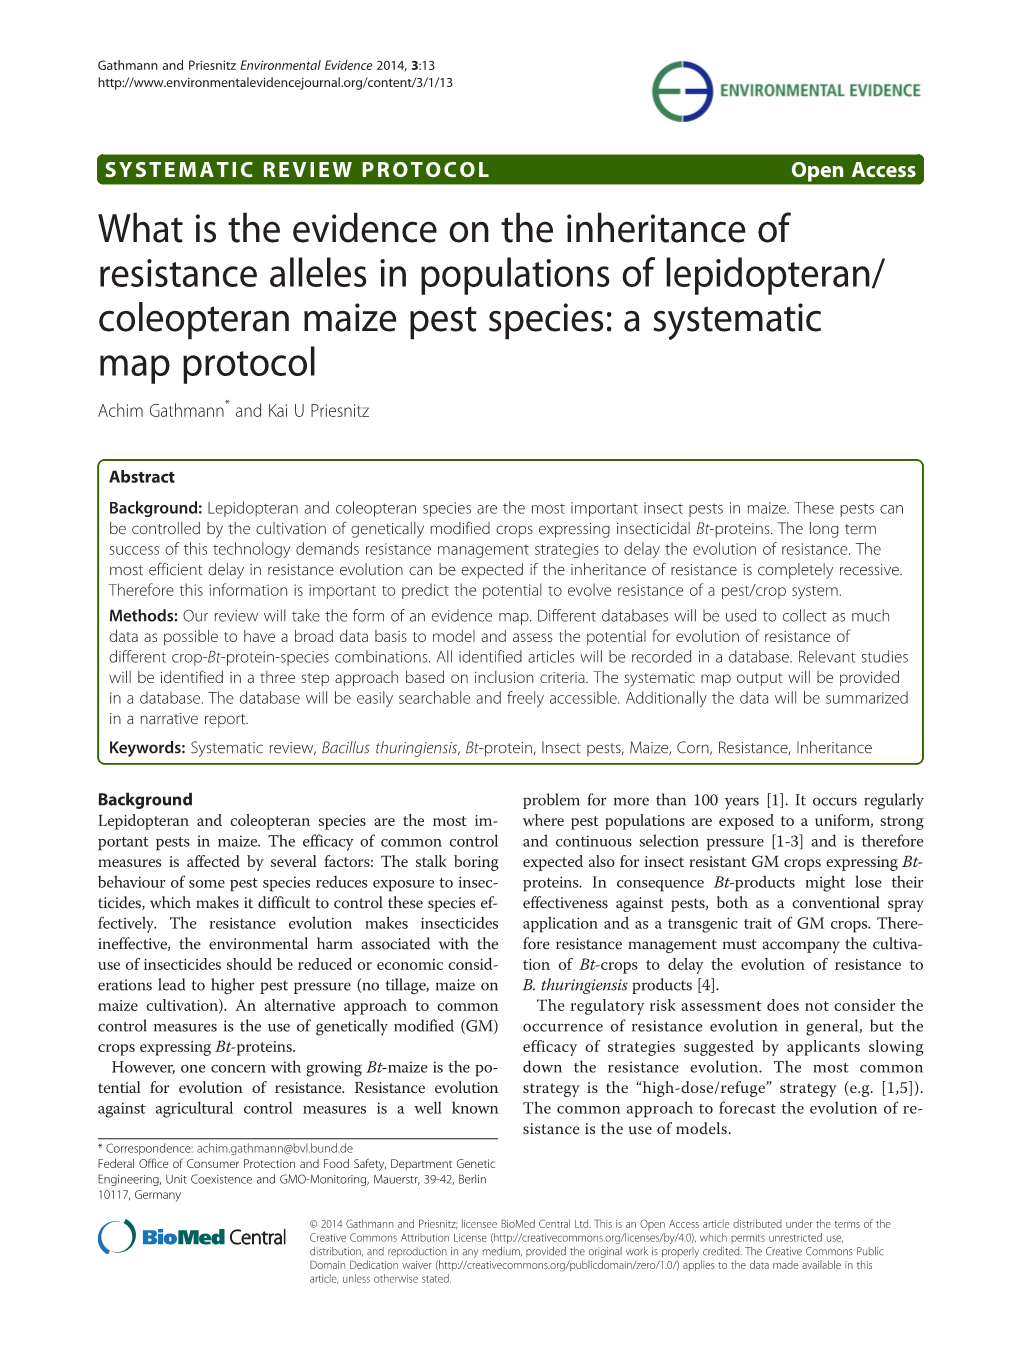 Coleopteran Maize Pest Species: a Systematic Map Protocol Achim Gathmann* and Kai U Priesnitz